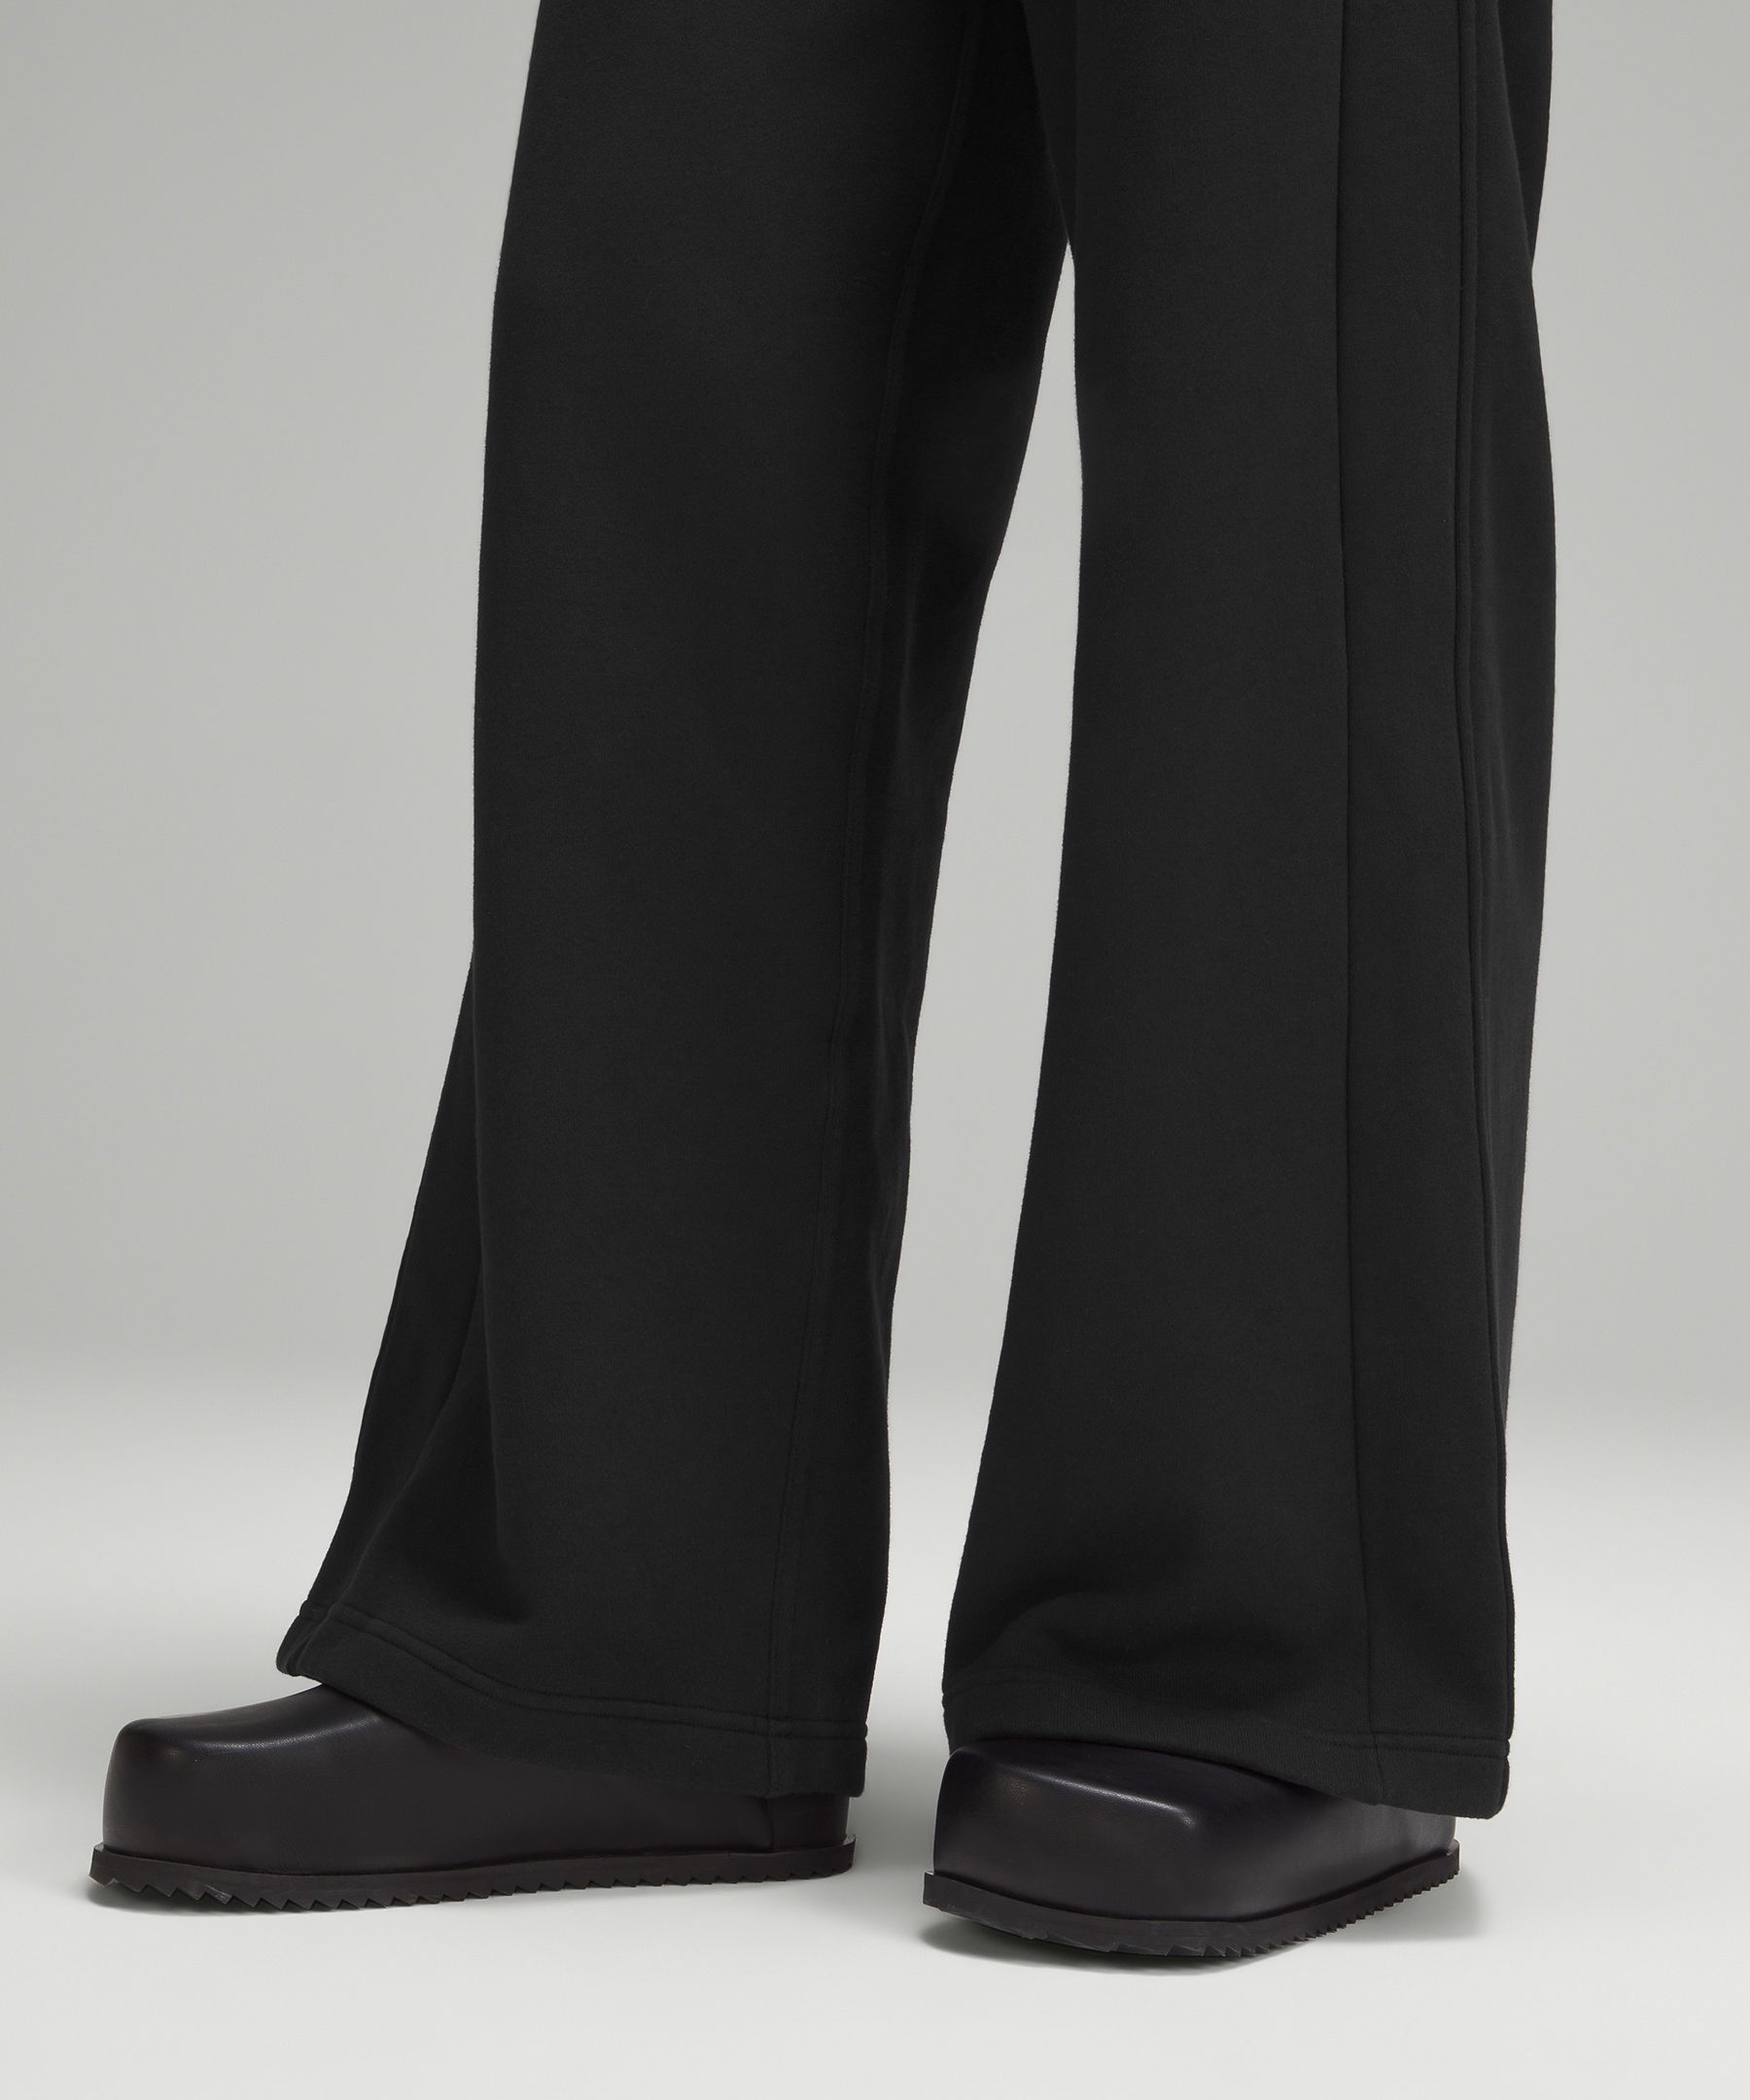 Scuba Mid-Rise Wide-Leg Pant *Full Length, Women's Sweatpants, lululemon